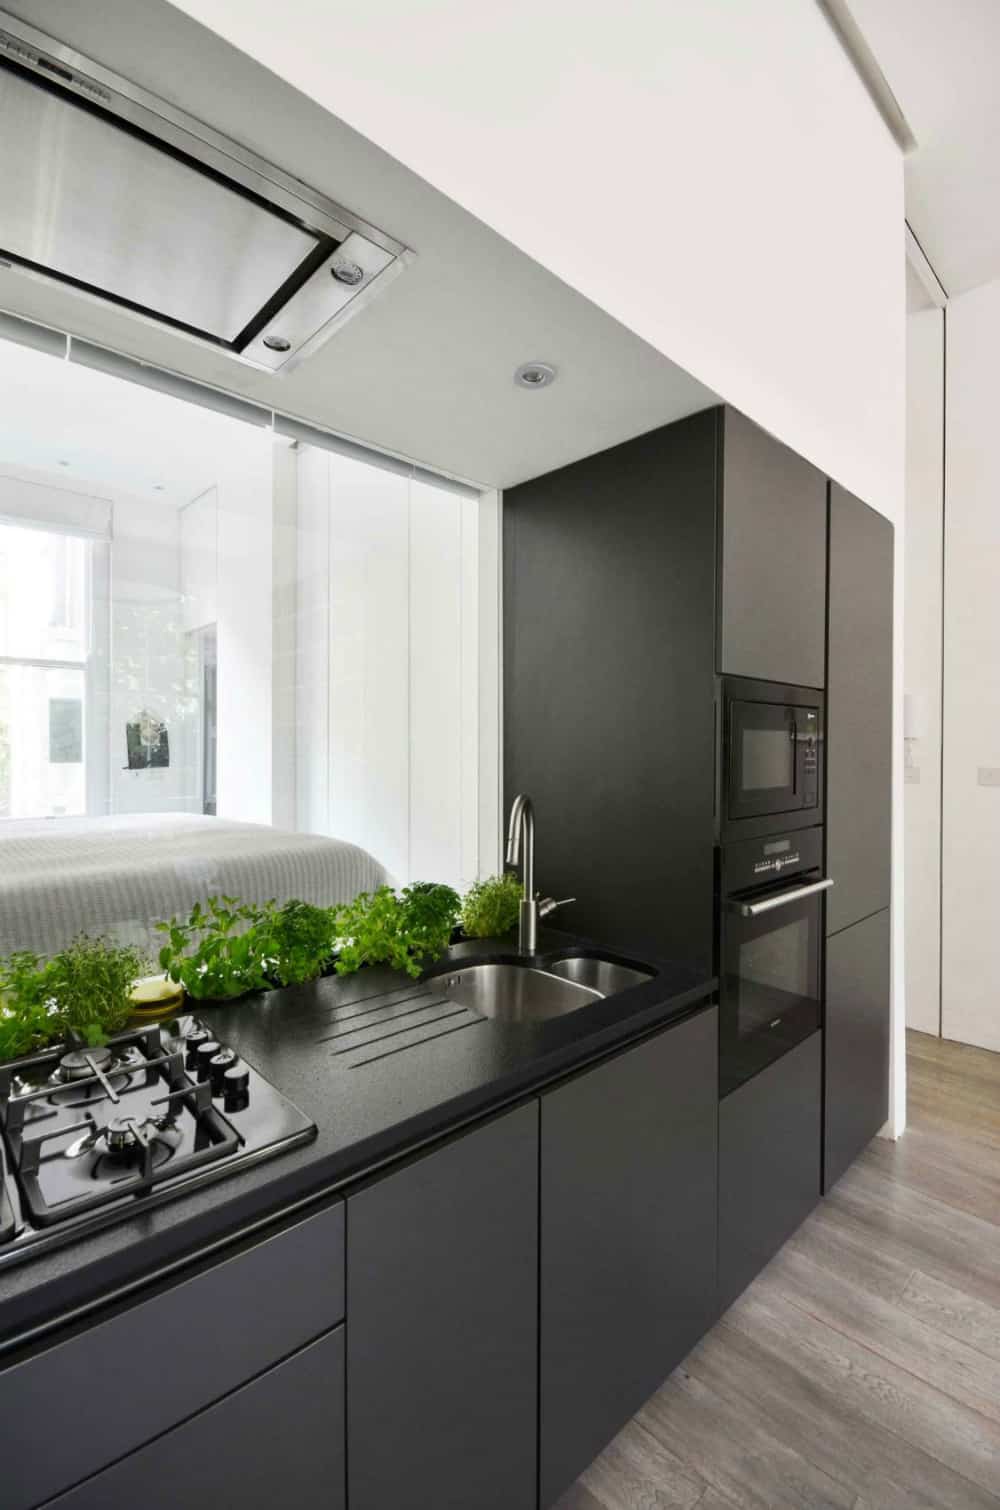 Kitchen backsplash is a transparent glass window into the bedroom